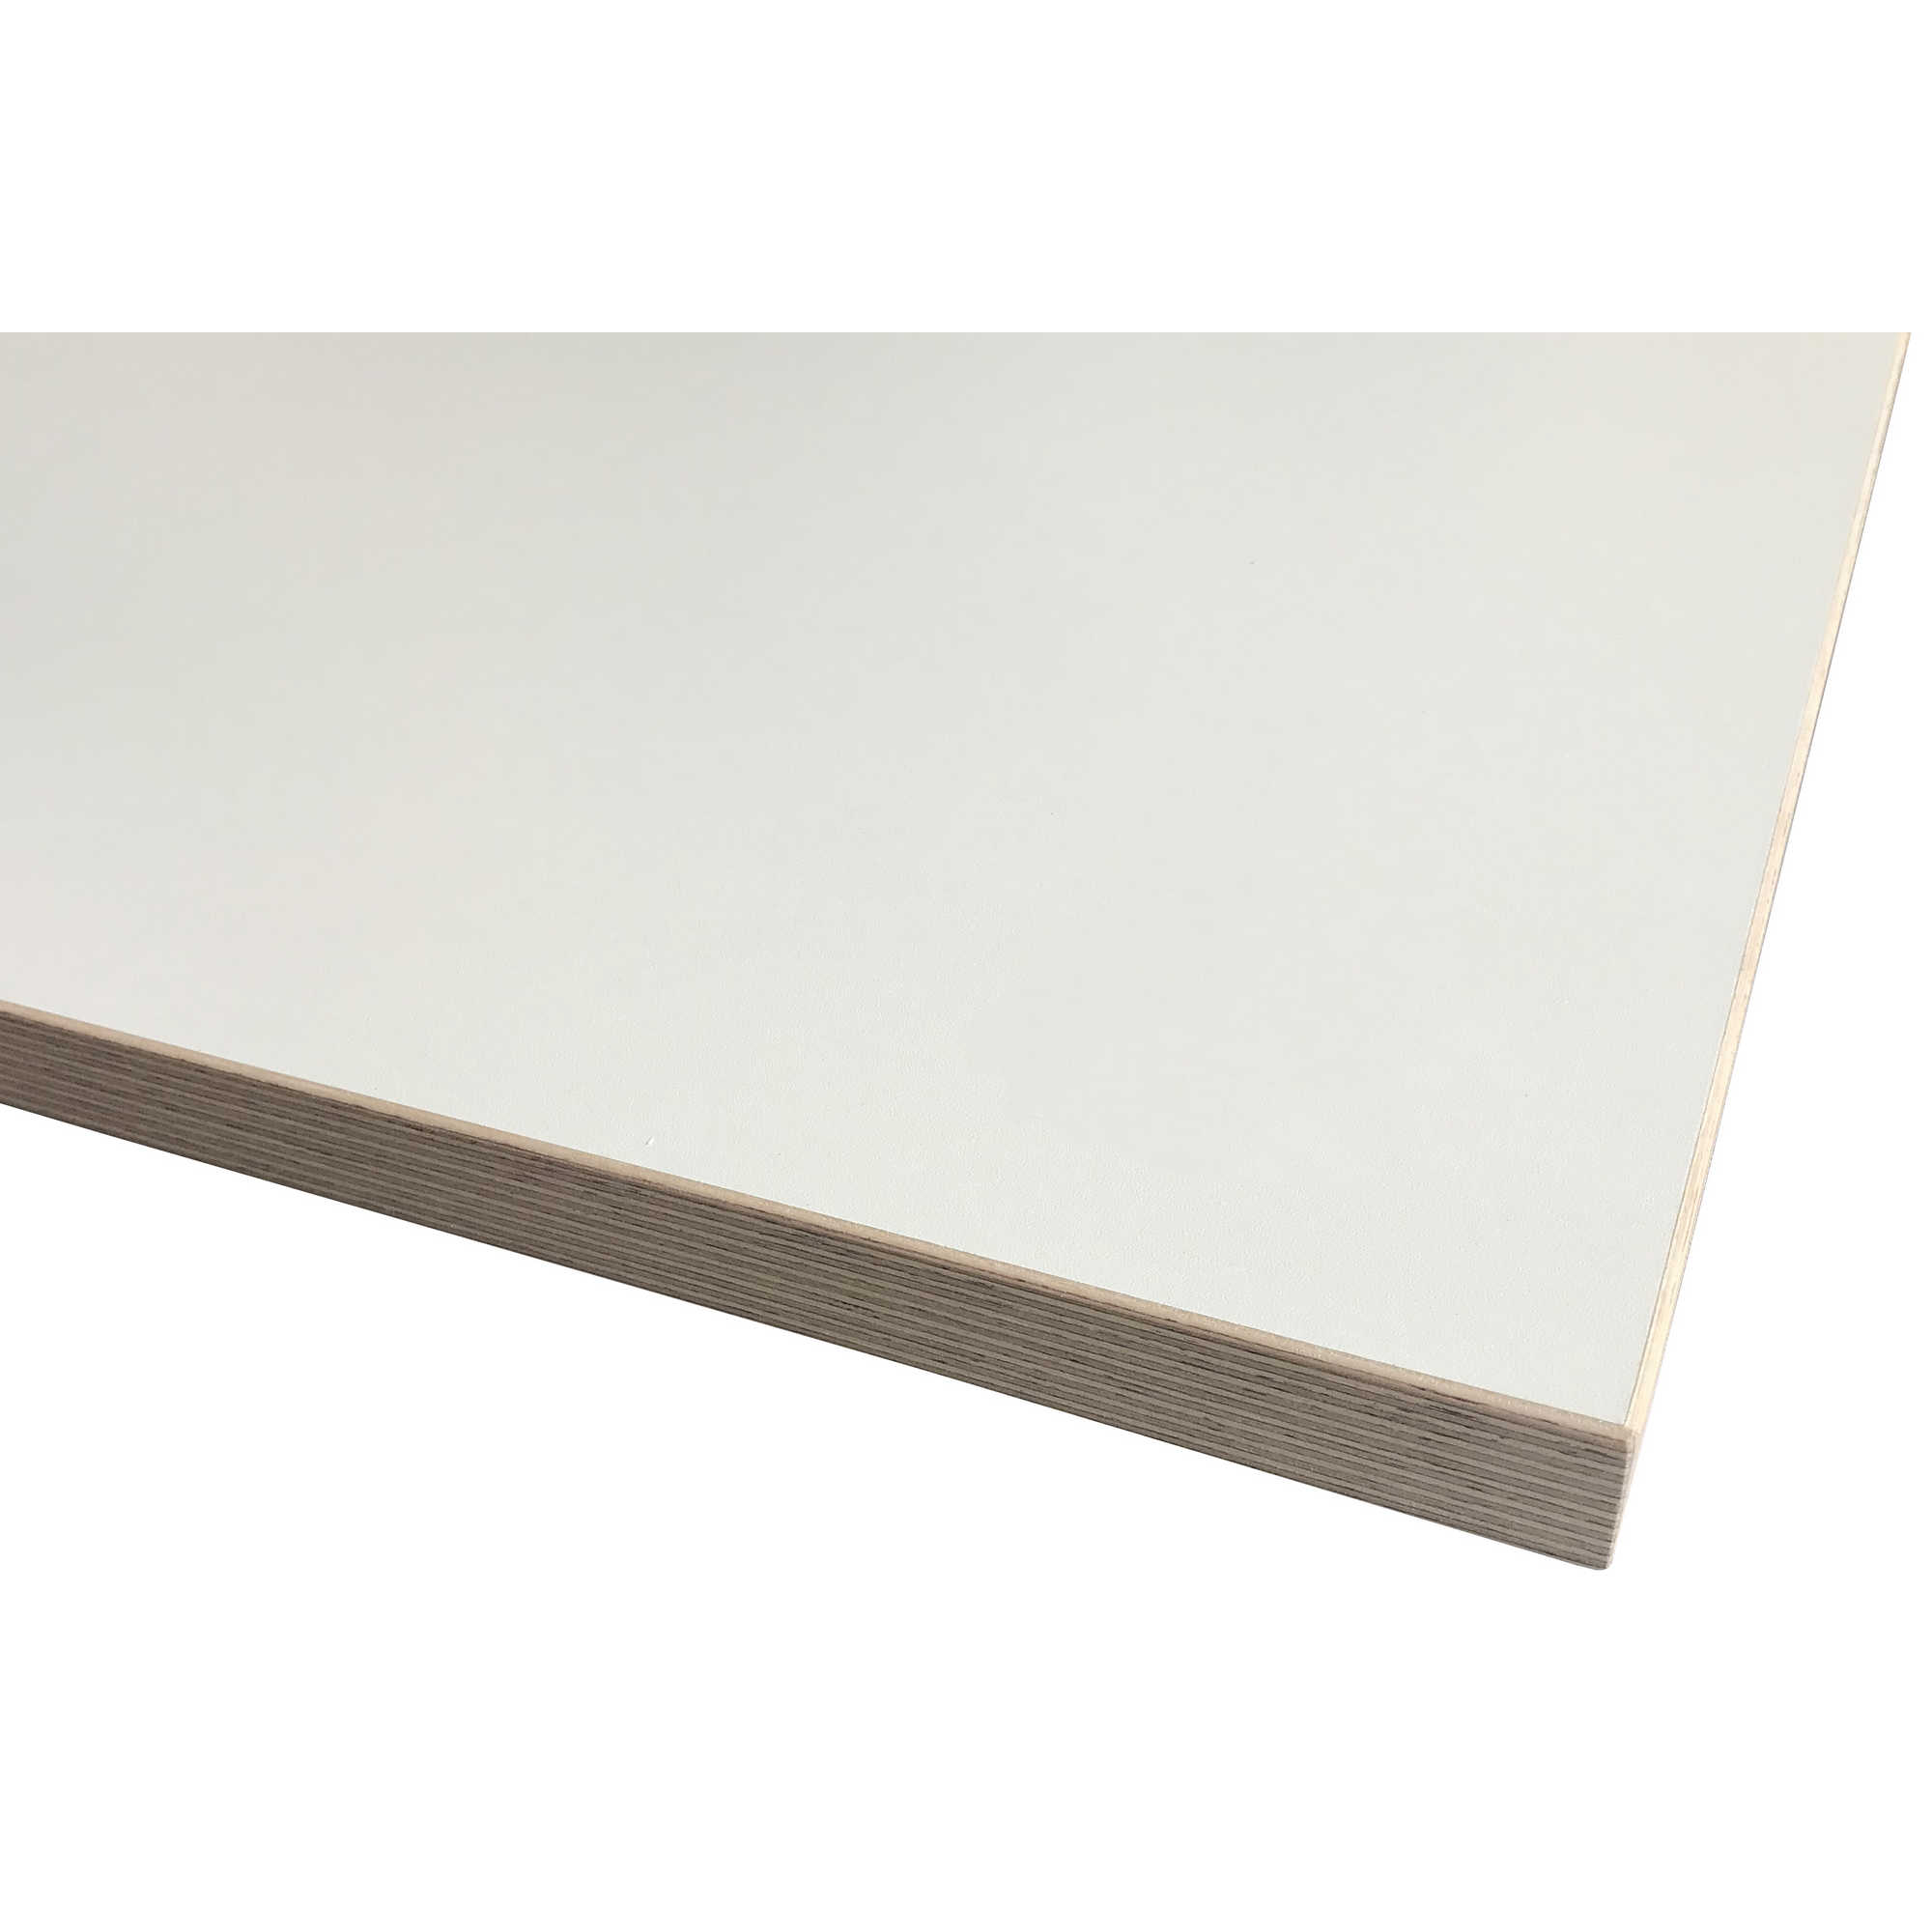 Tischplatte Dekorspan weiß 200 x 80 x 2,7 cm + product picture